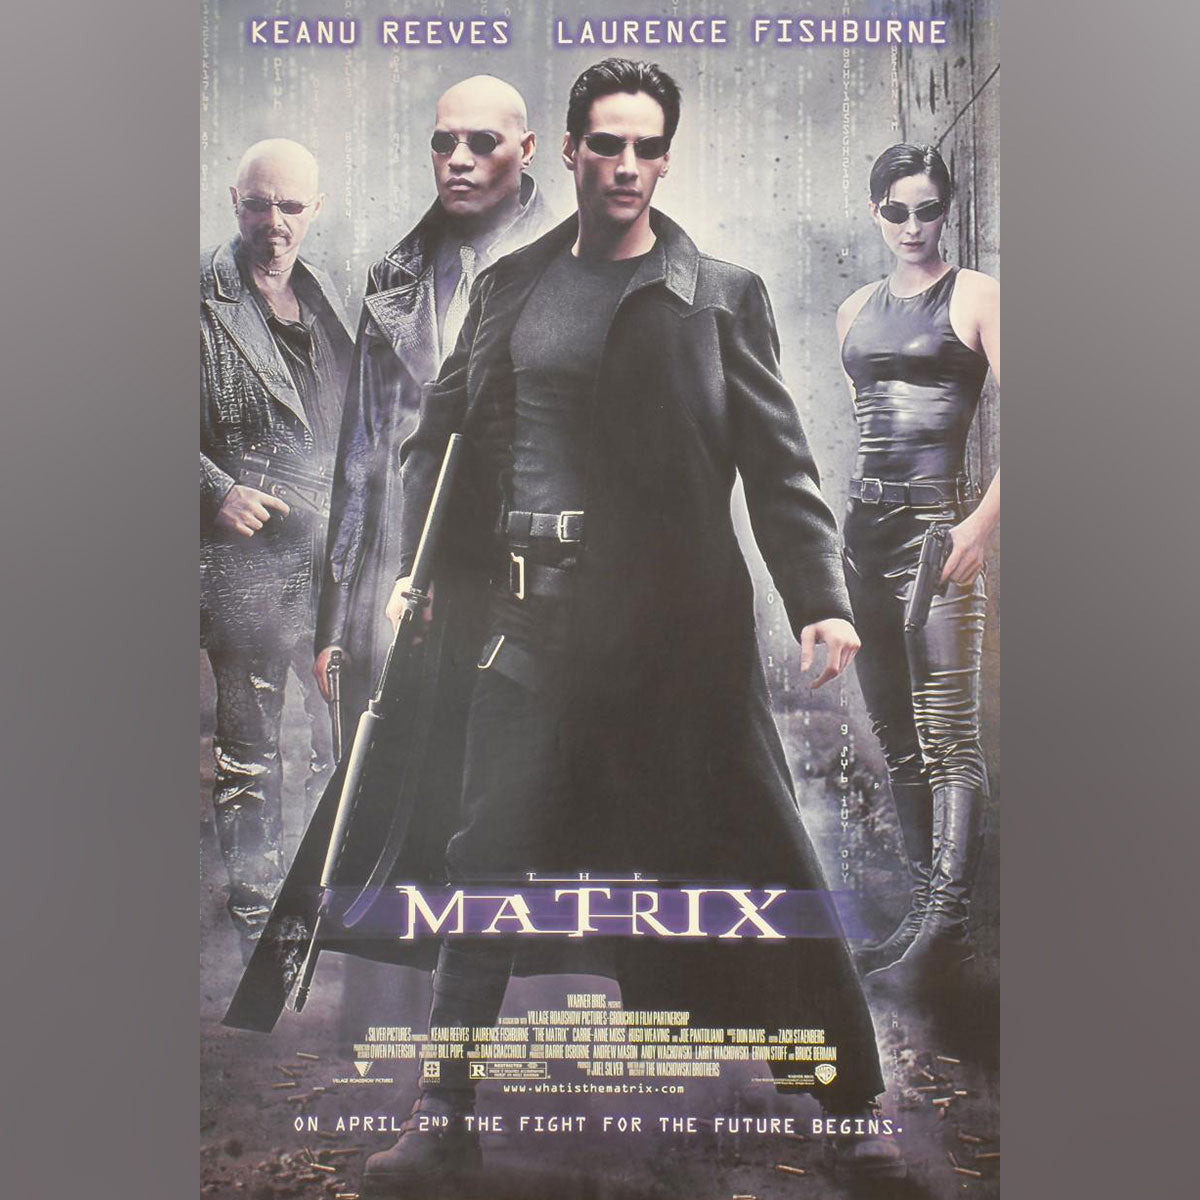 Original Movie Poster of Matrix, The (1999)